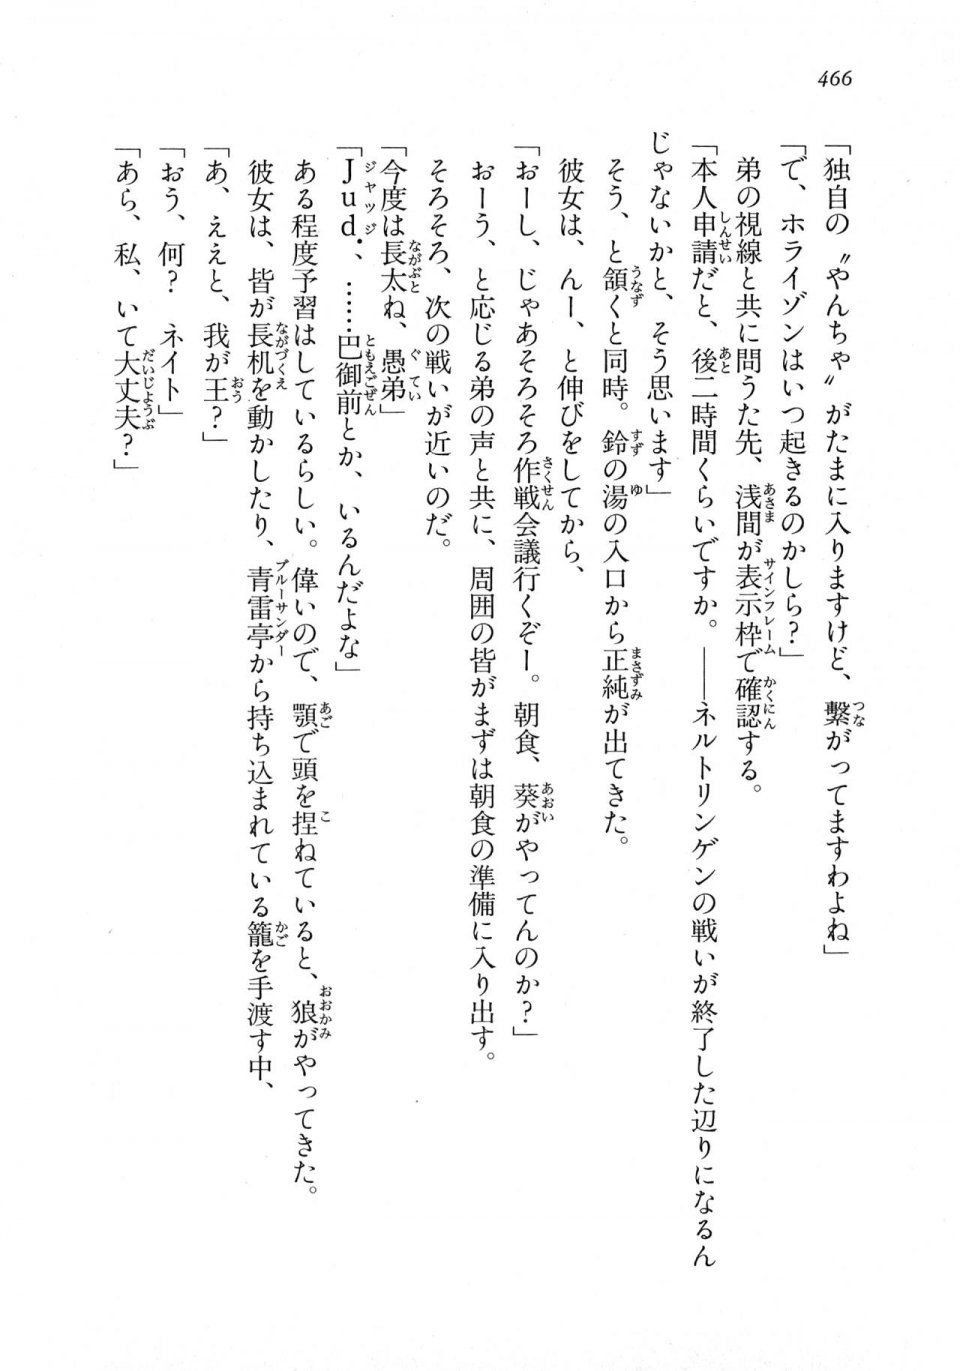 Kyoukai Senjou no Horizon LN Vol 18(7C) Part 1 - Photo #466